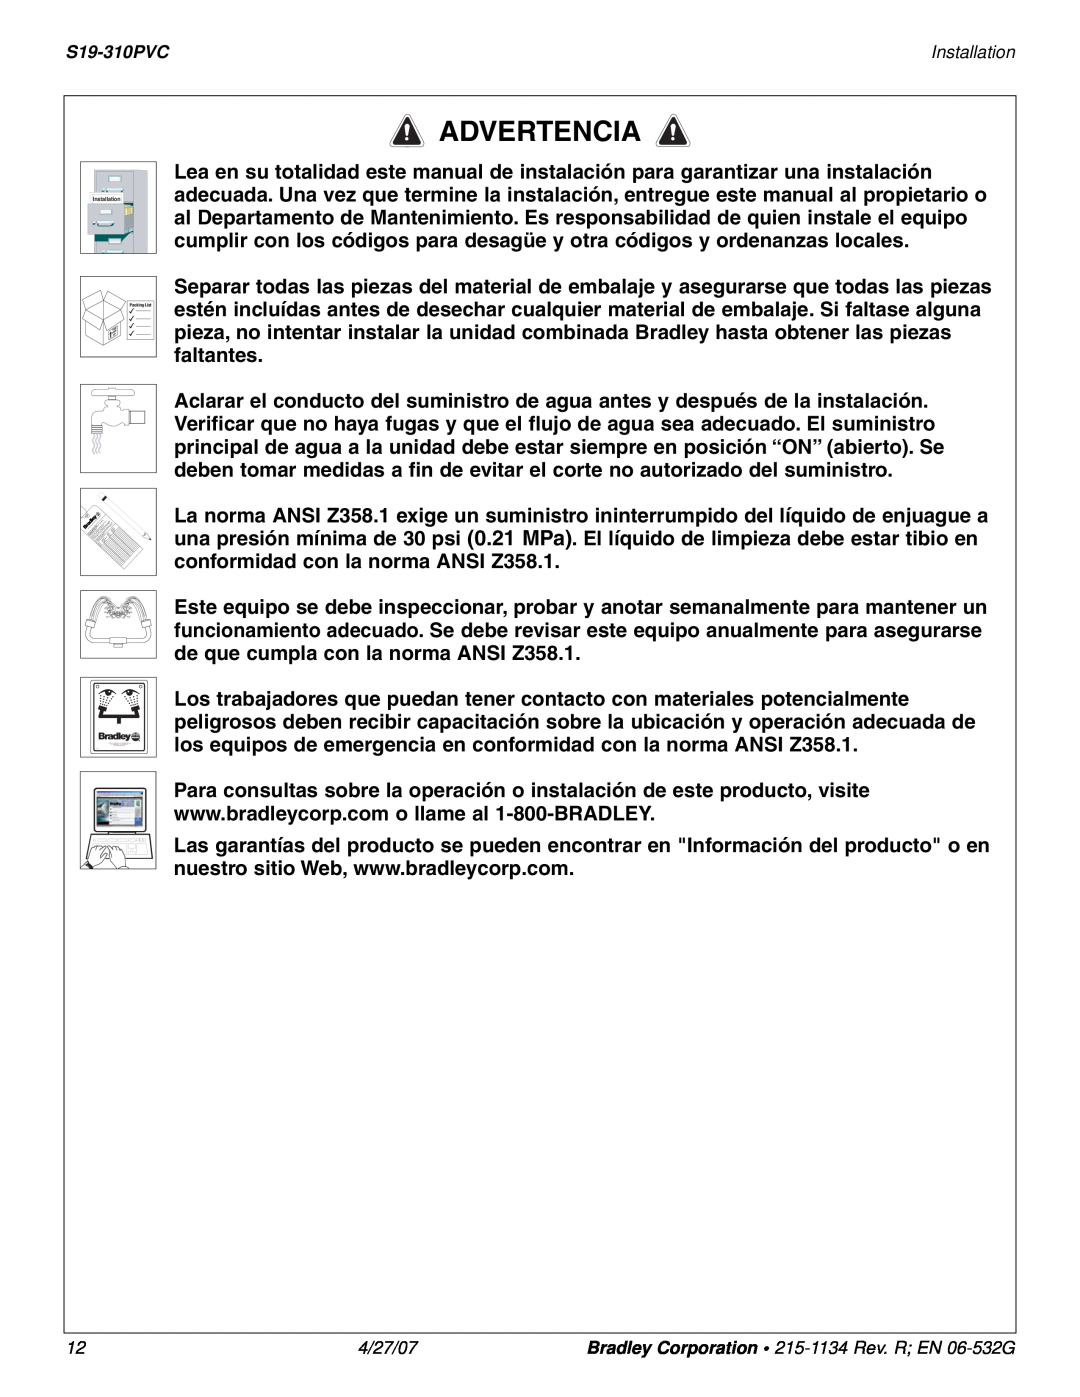 Bradley Smoker S19-310PVC installation instructions Advertencia 